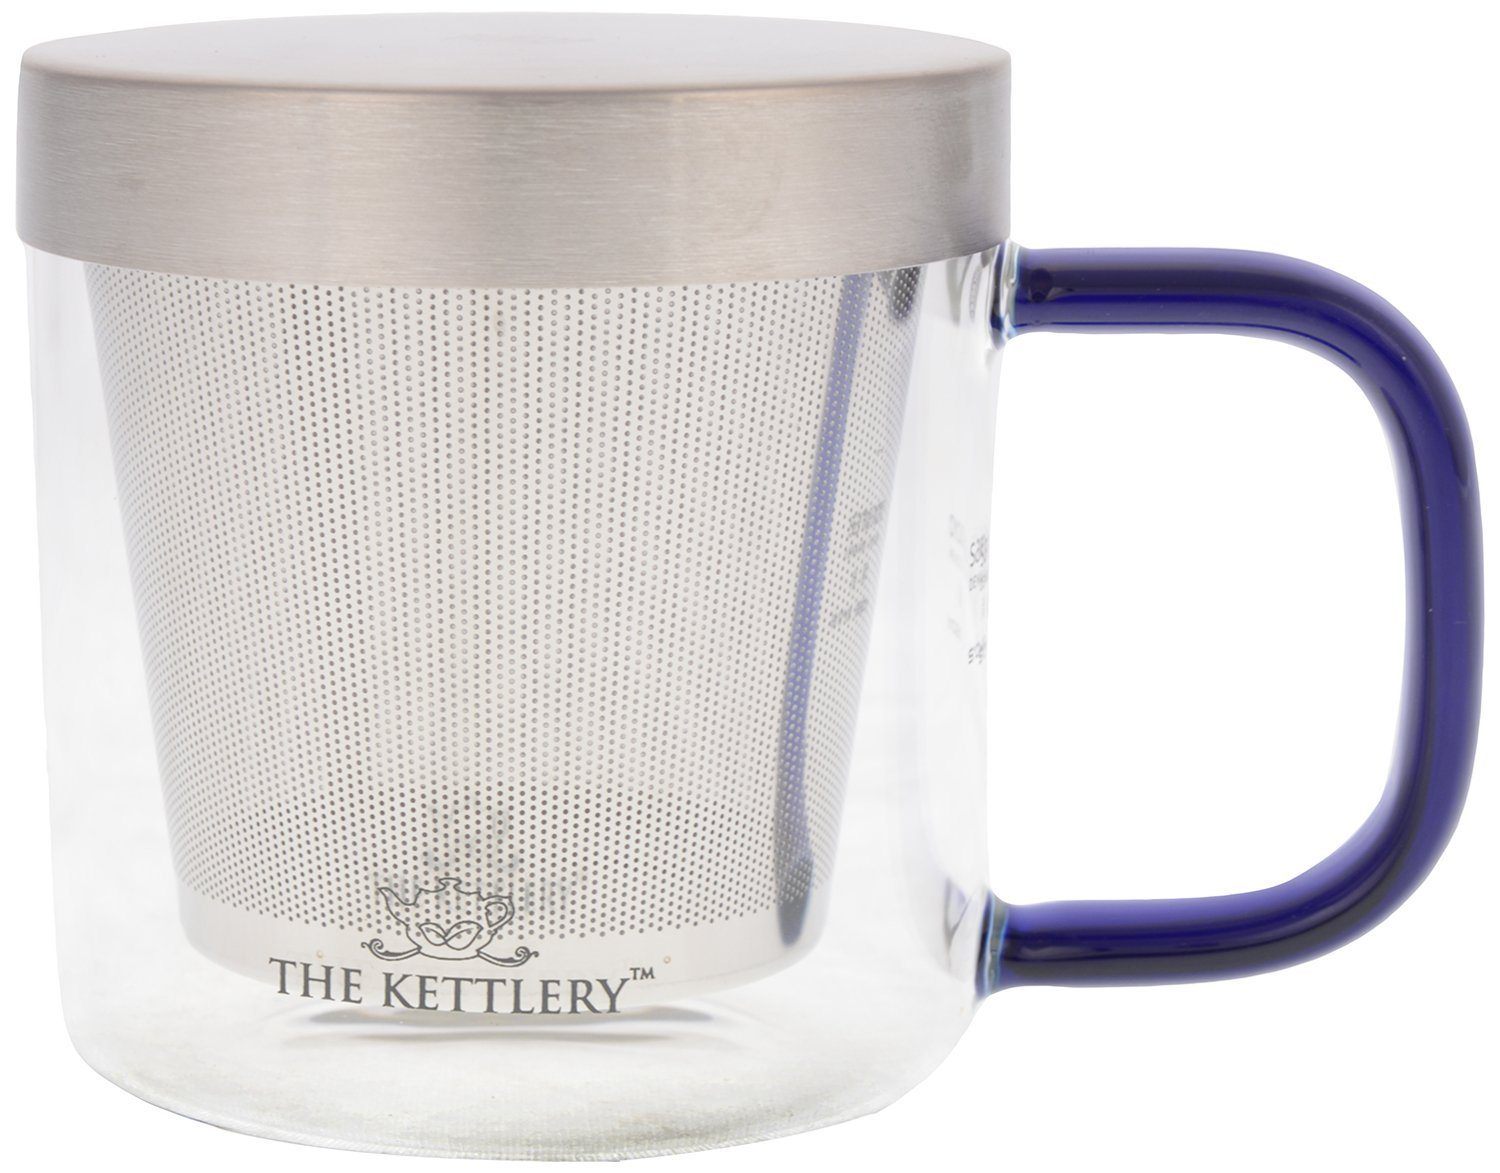 Milk Glass Tea Cup Manufacturer Factory, Supplier, Wholesale - FEEMIO